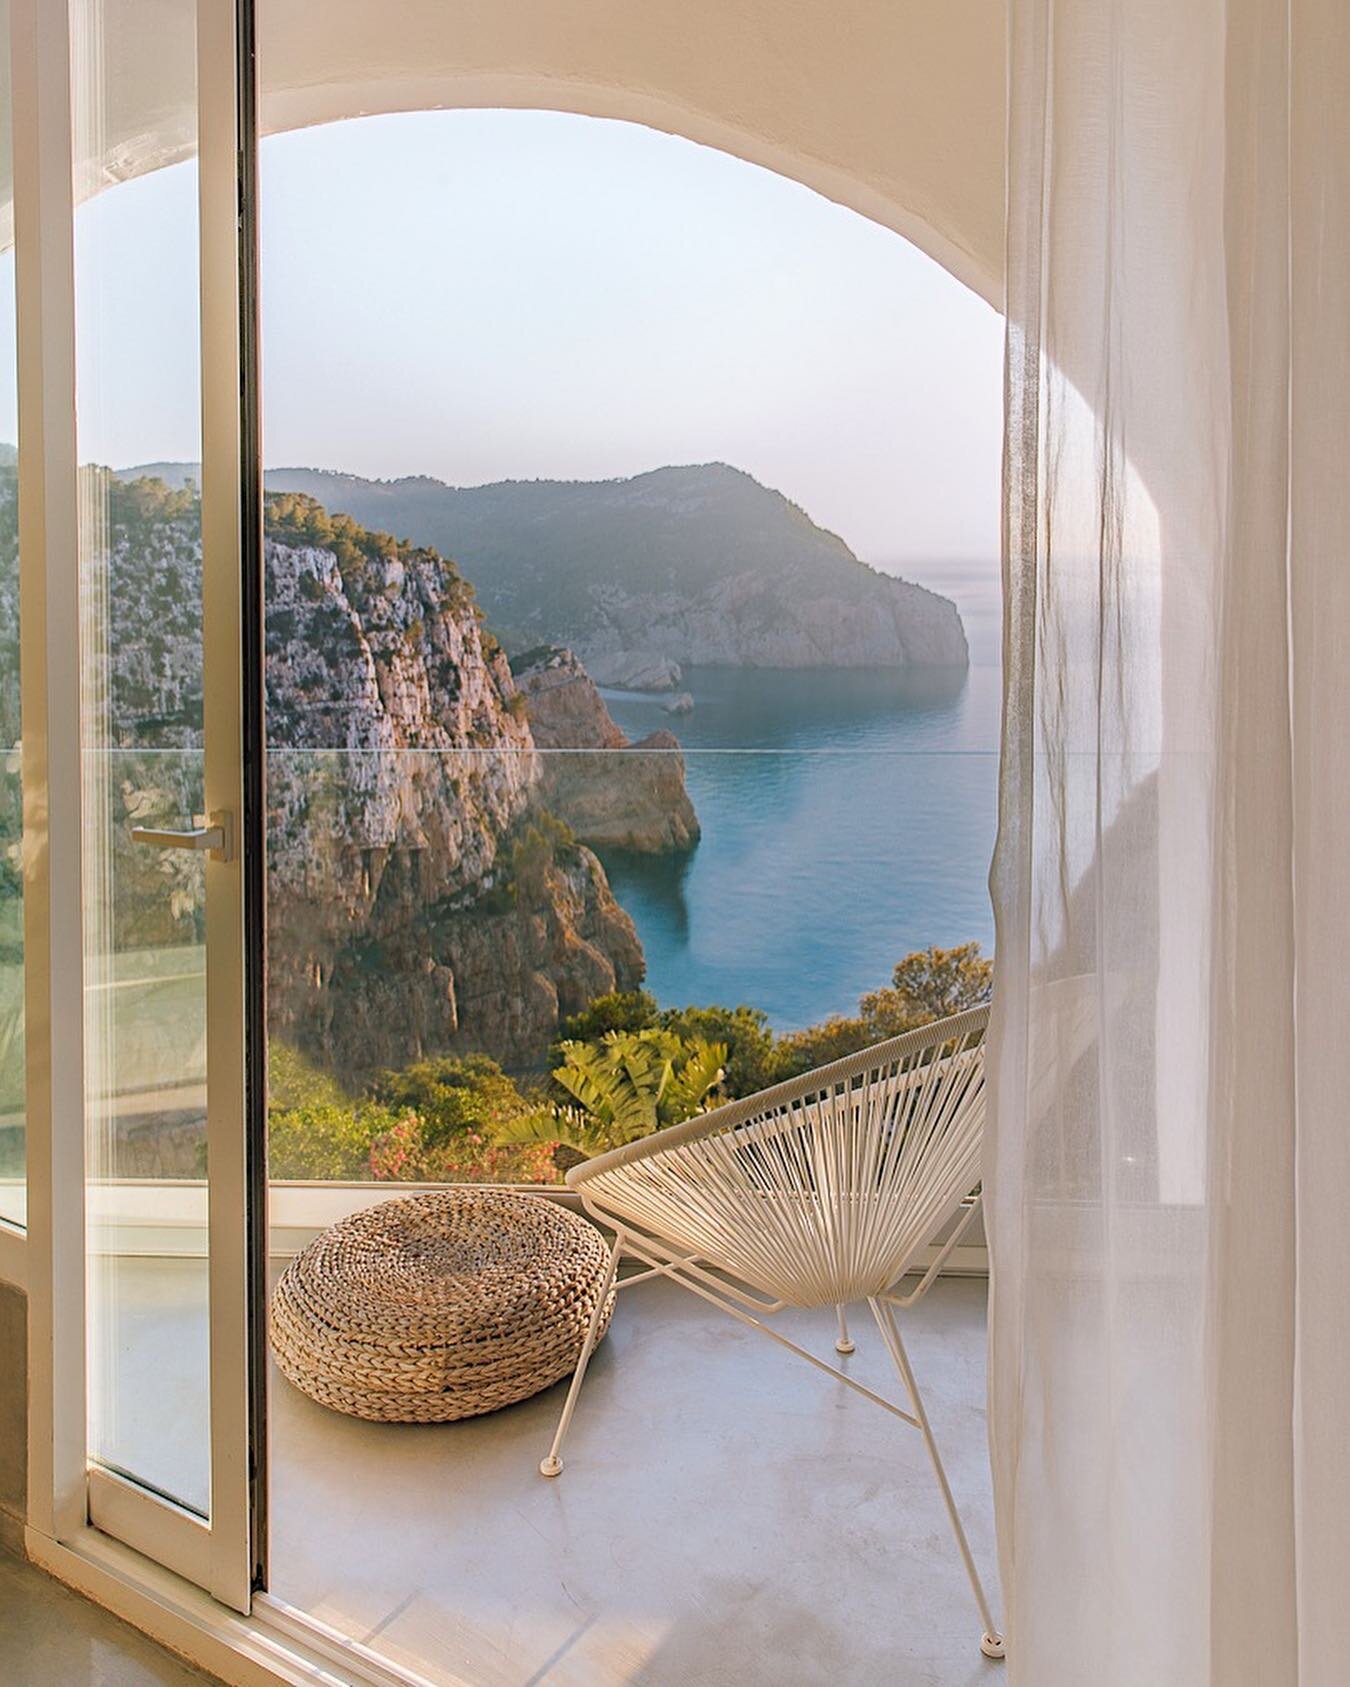 Pull up a chair 🤍 A visual diary of the best Mediterranean hotels with a view all from the comfort of your seat.
1. @haciendanaxamena 
2. @marincanto_romantichotel 
3. @fincasonru 
4. @belmondlaresidencia 
5. @borgosantopietro 
6. @casxorc